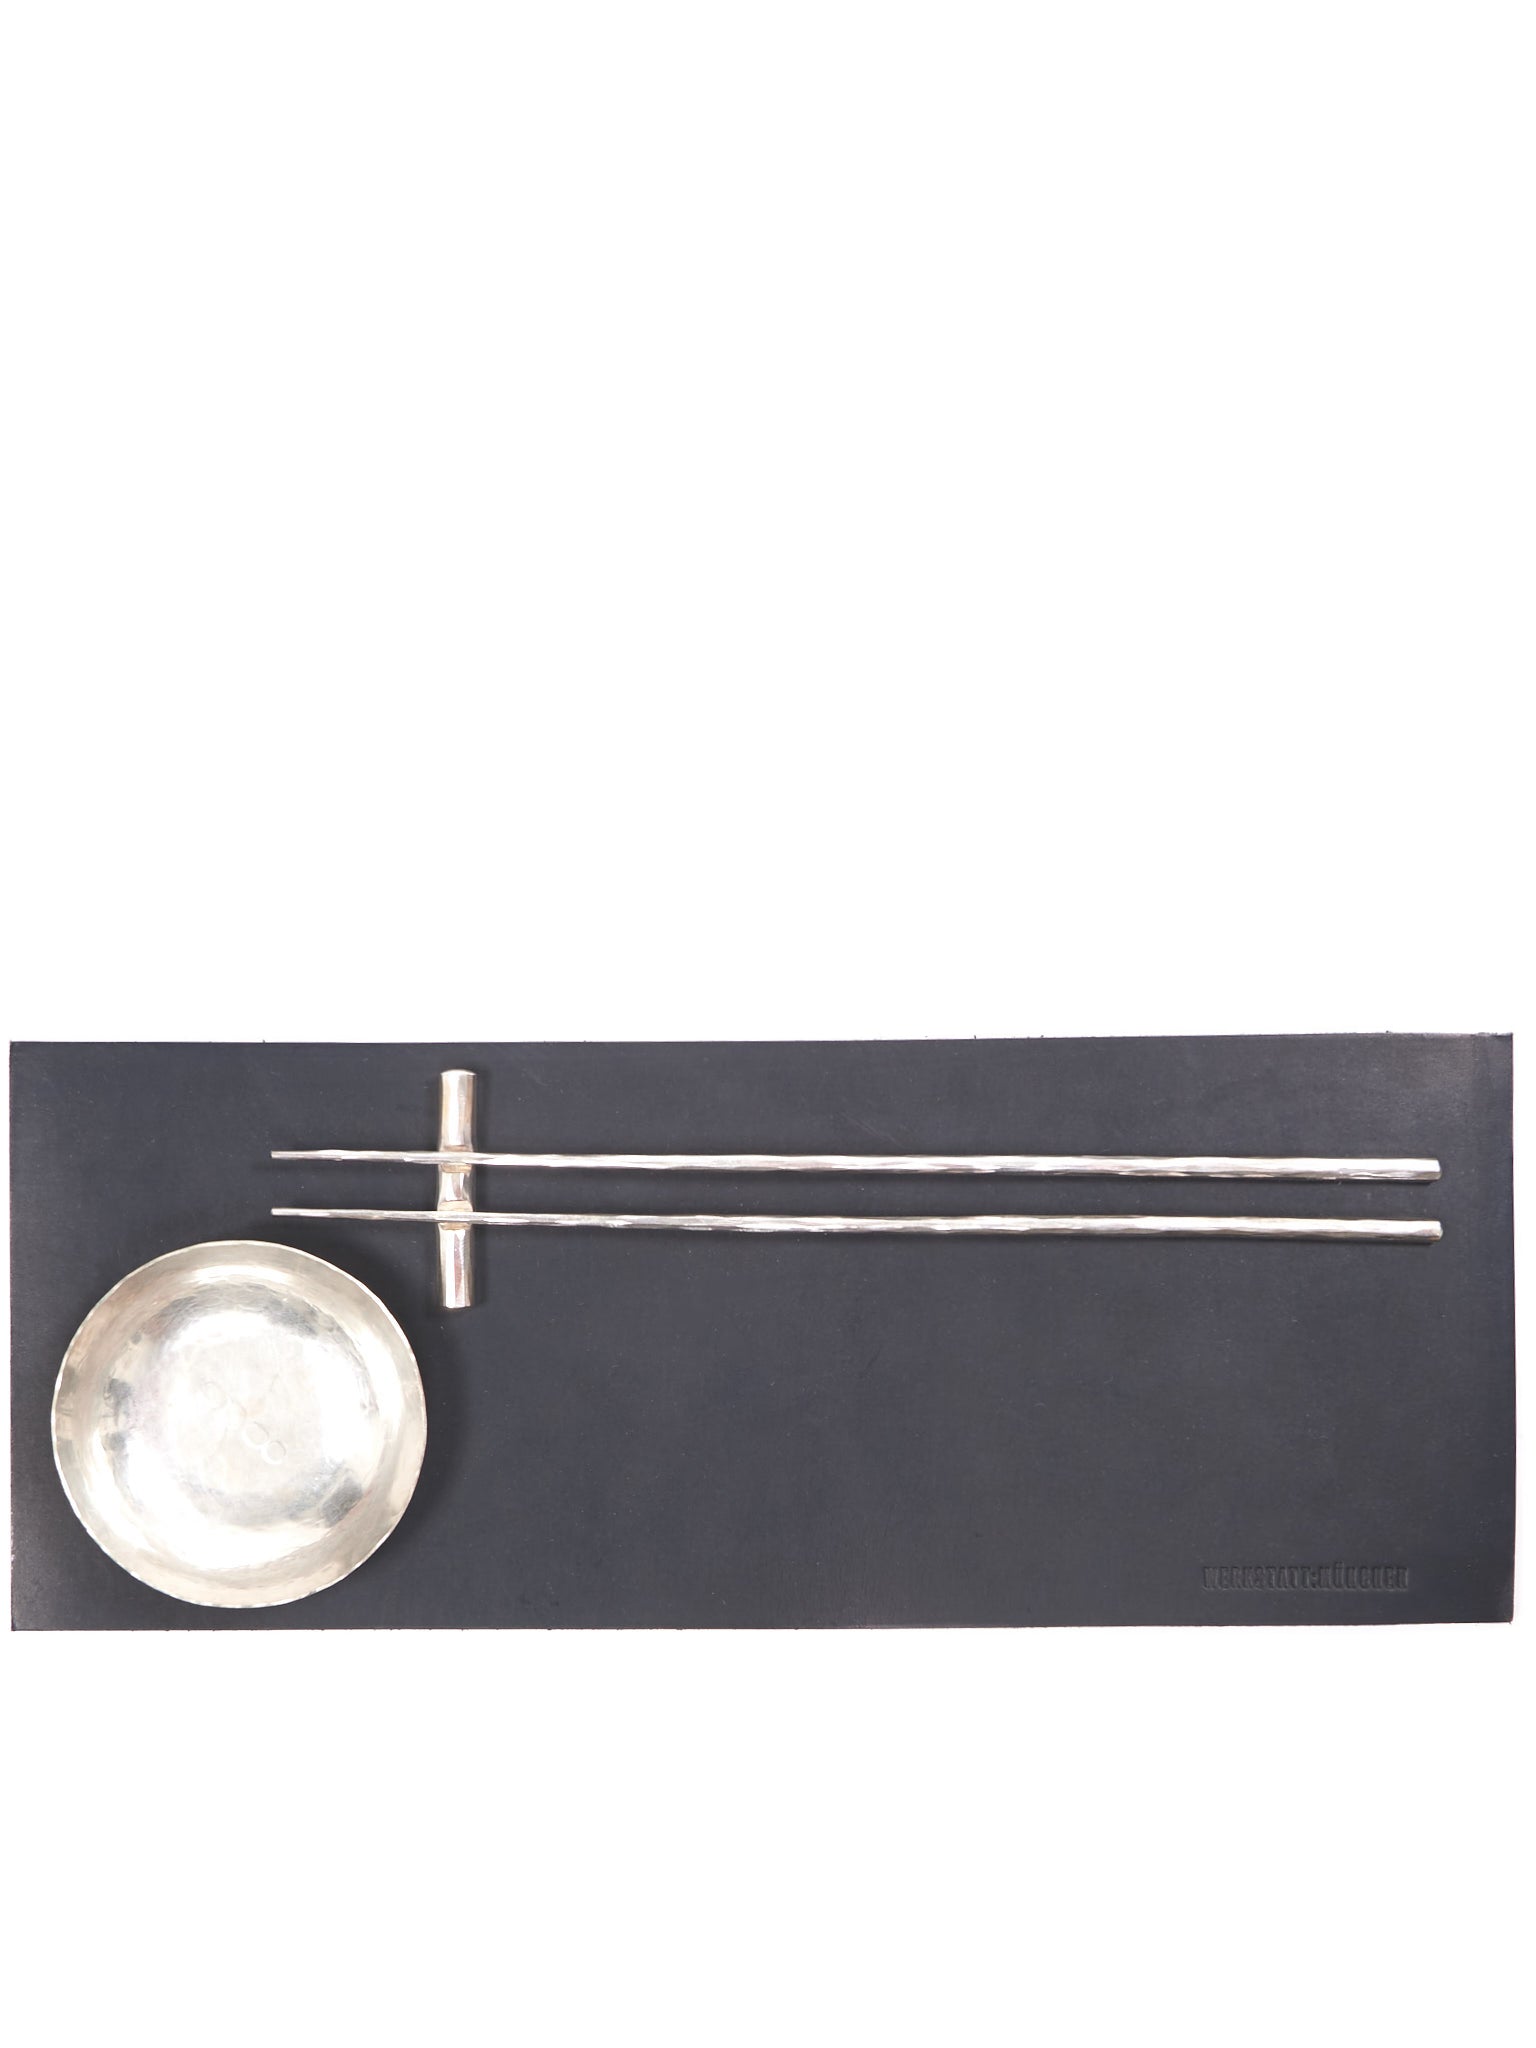 Chopsticks Set (M0131-CSTK-SET-TABLE-MAT-SIL)